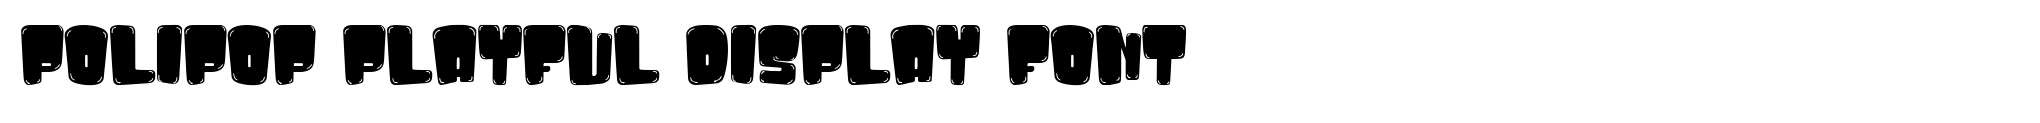 Polipop Playful Display Font image